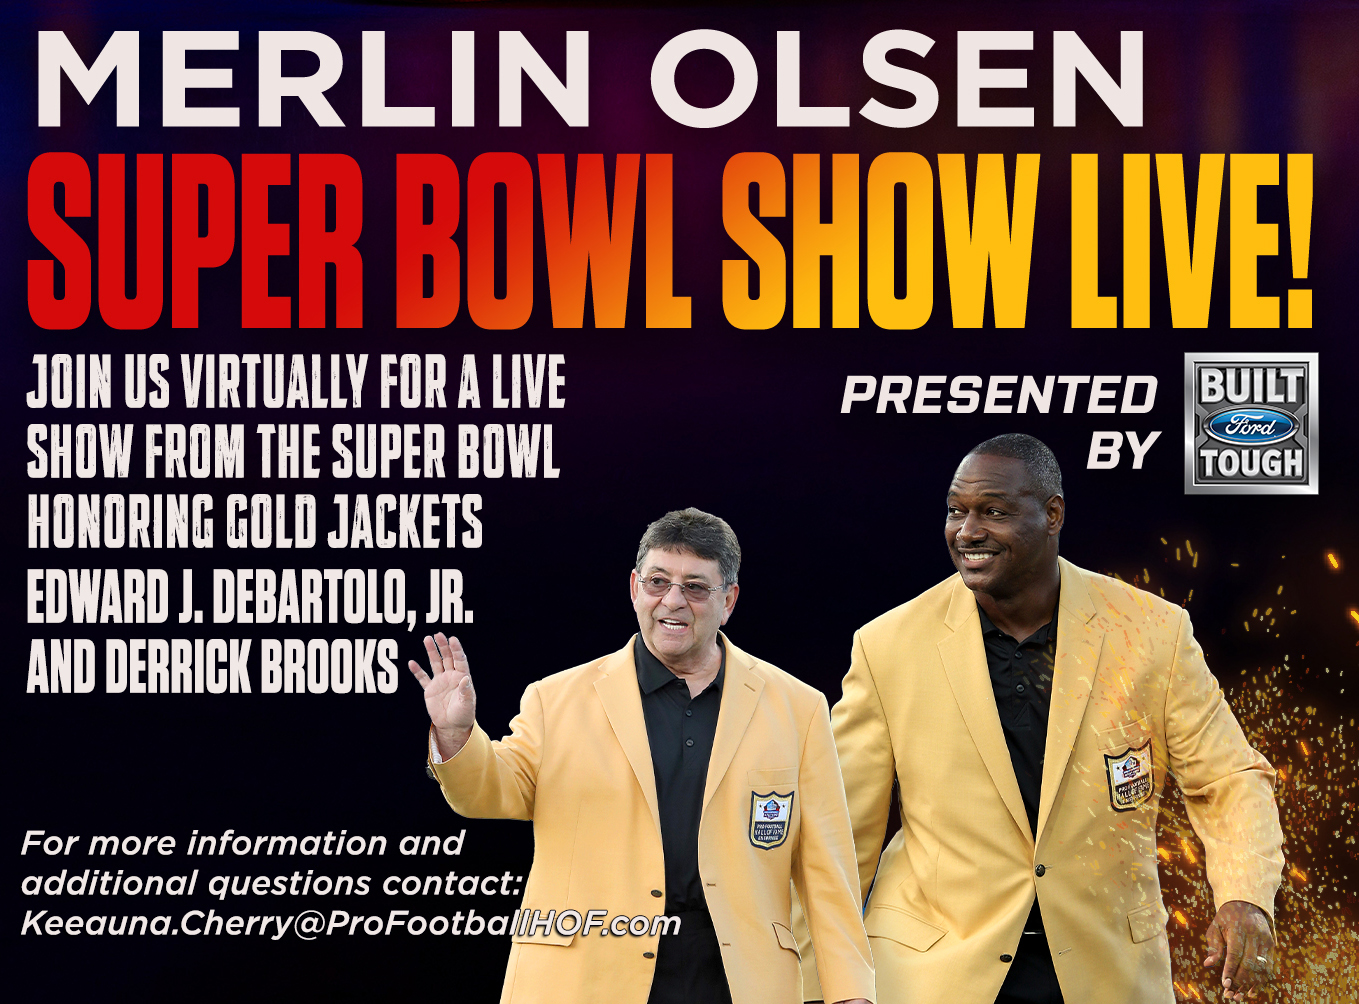 Merlin Olsen Super Bowl Show Live